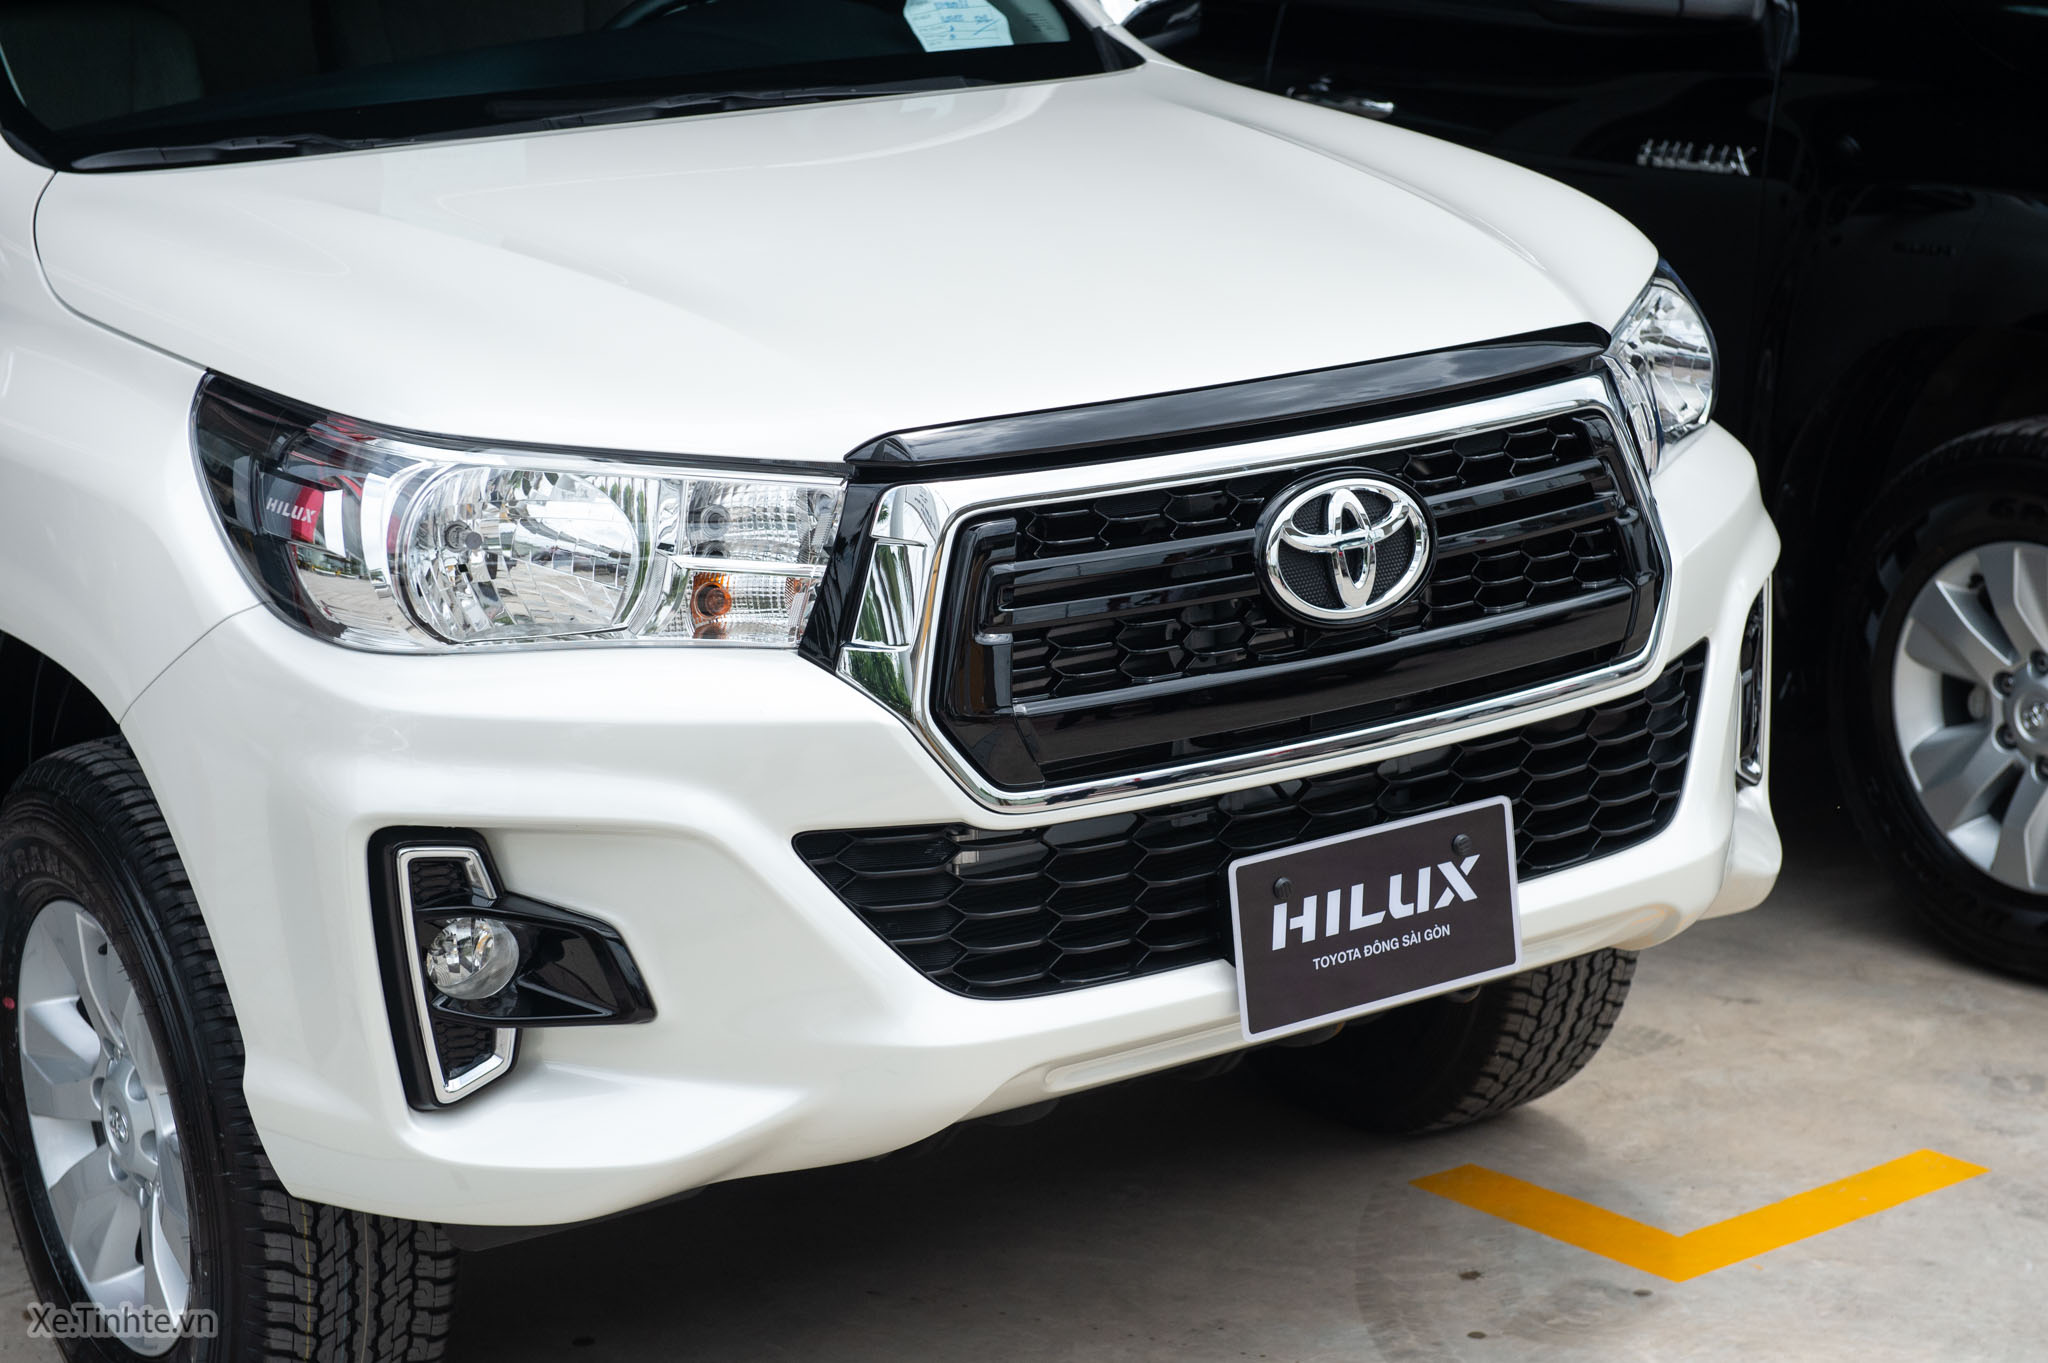 Toyota_Hilux 2018_Xe.tinhte.vn-3296.jpg